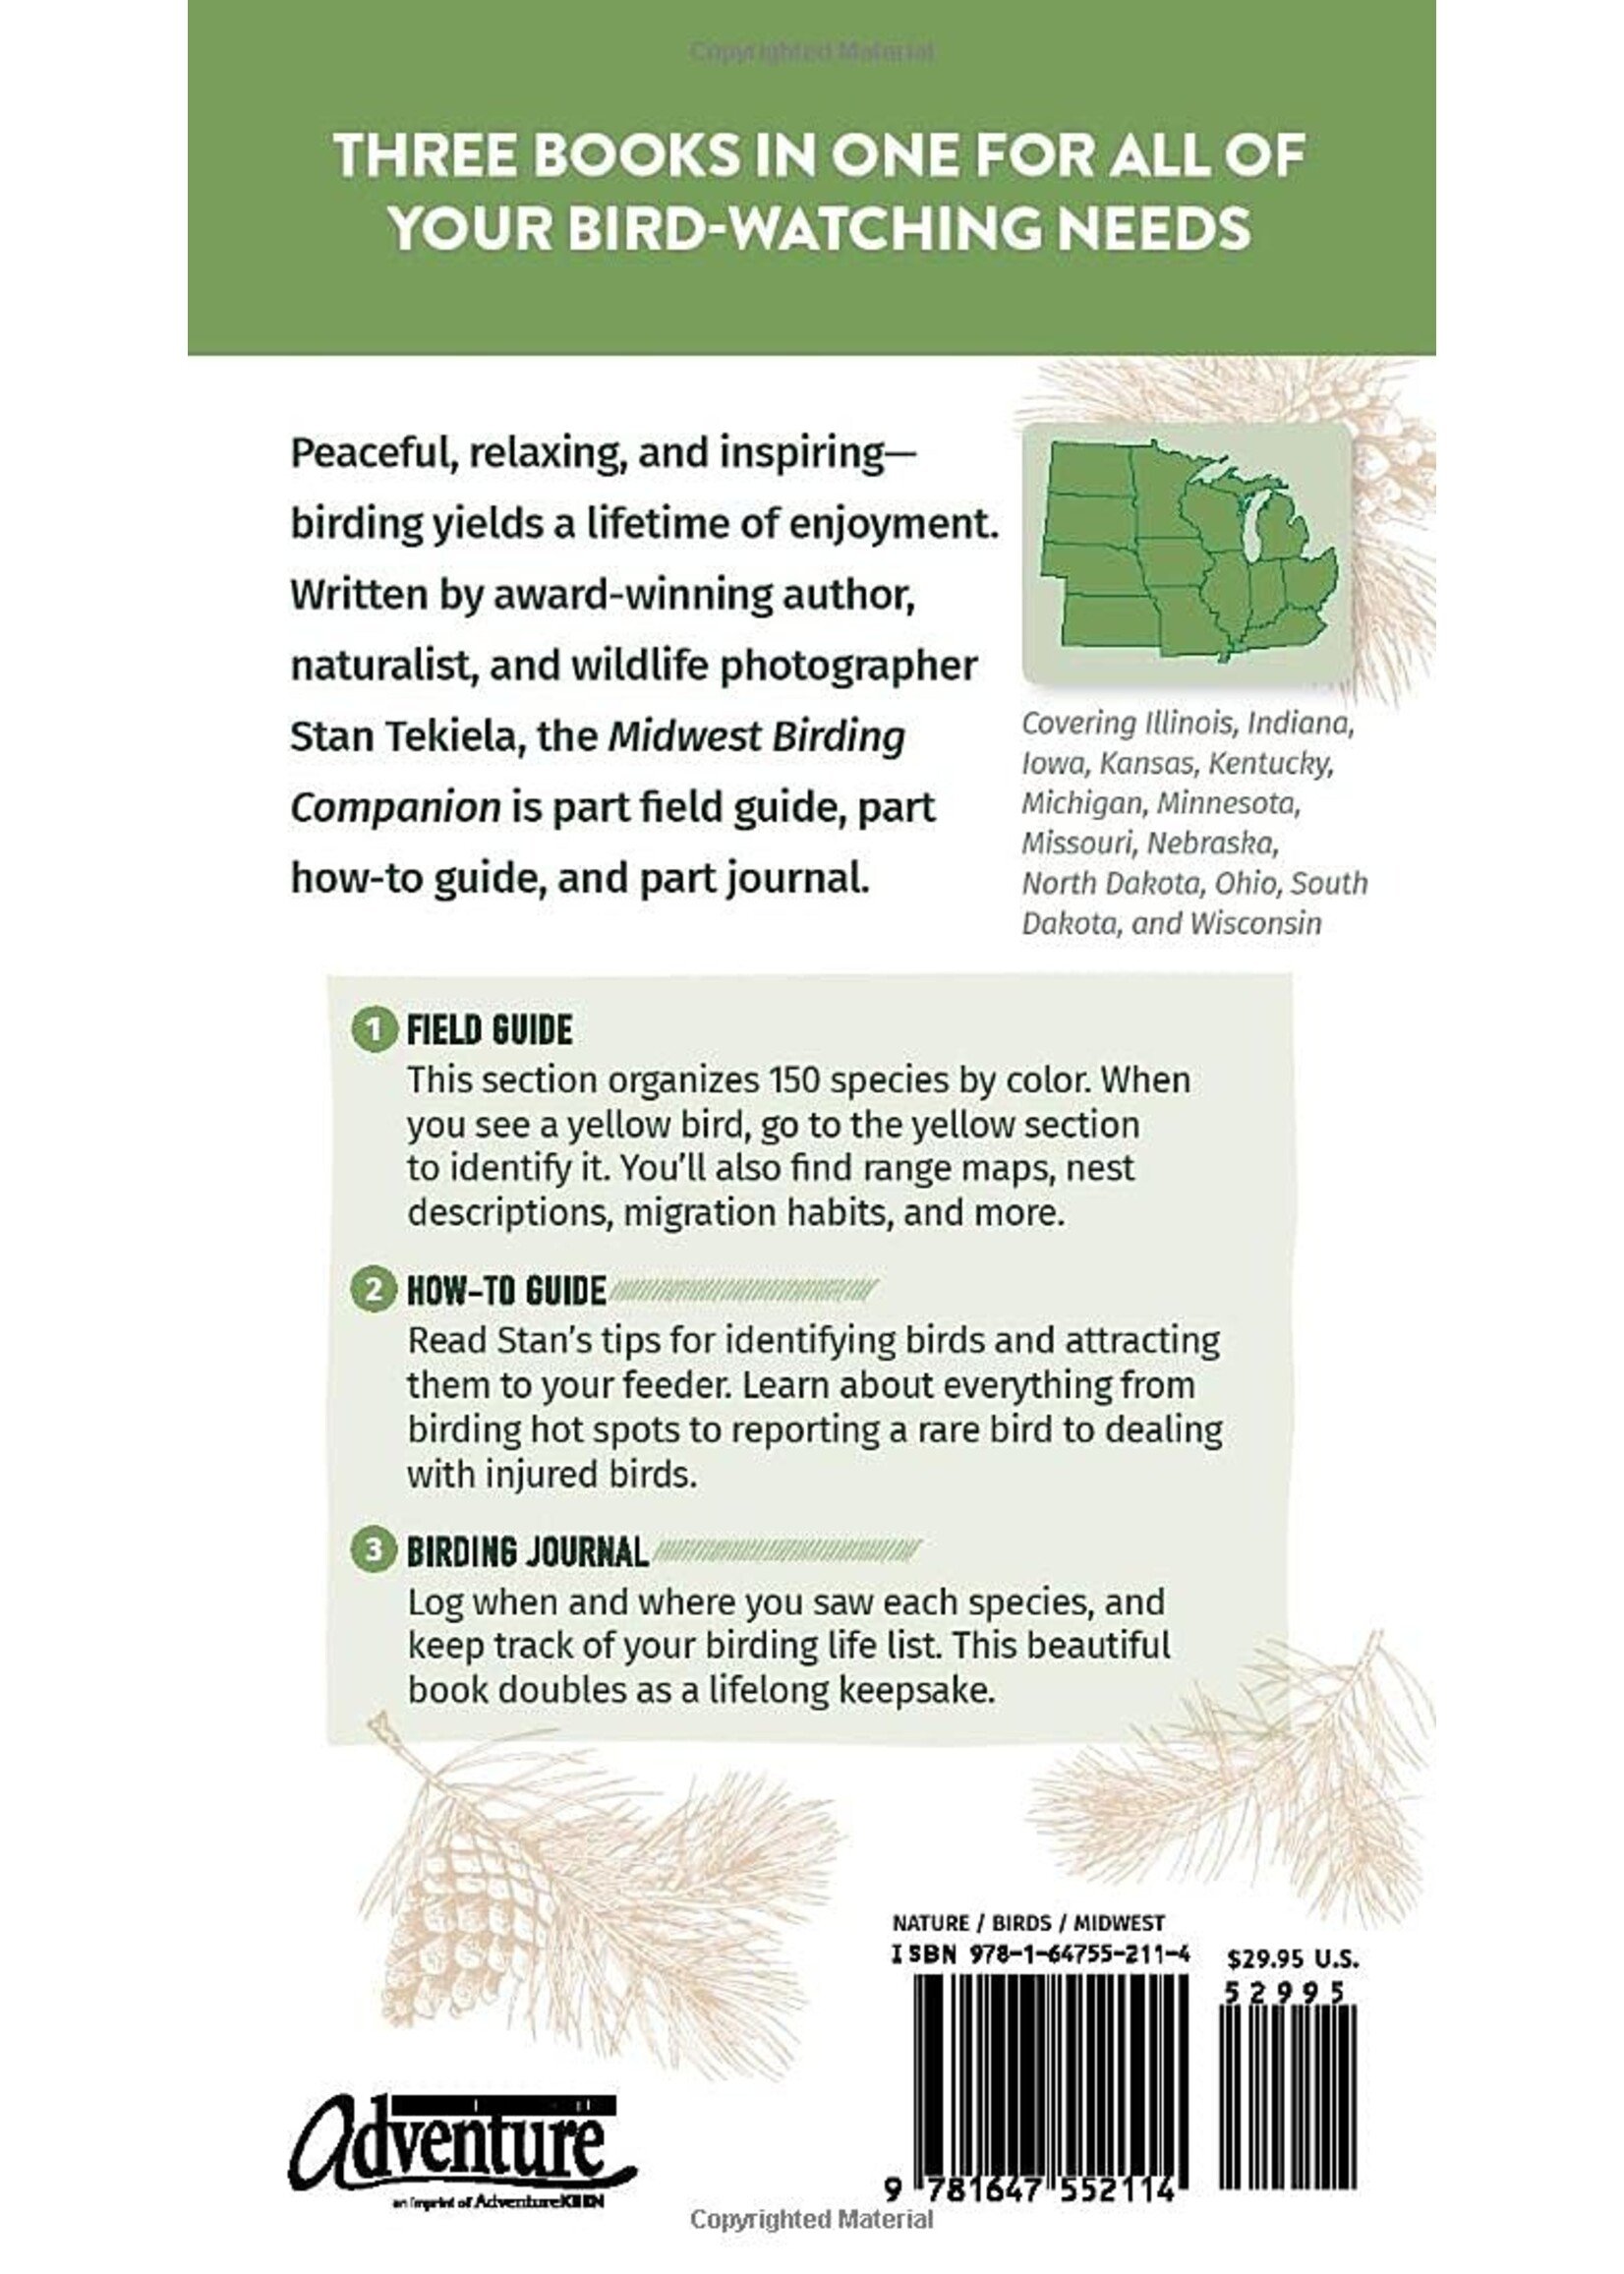 Midwest Birding Companion: Field Guide & Birding Journal